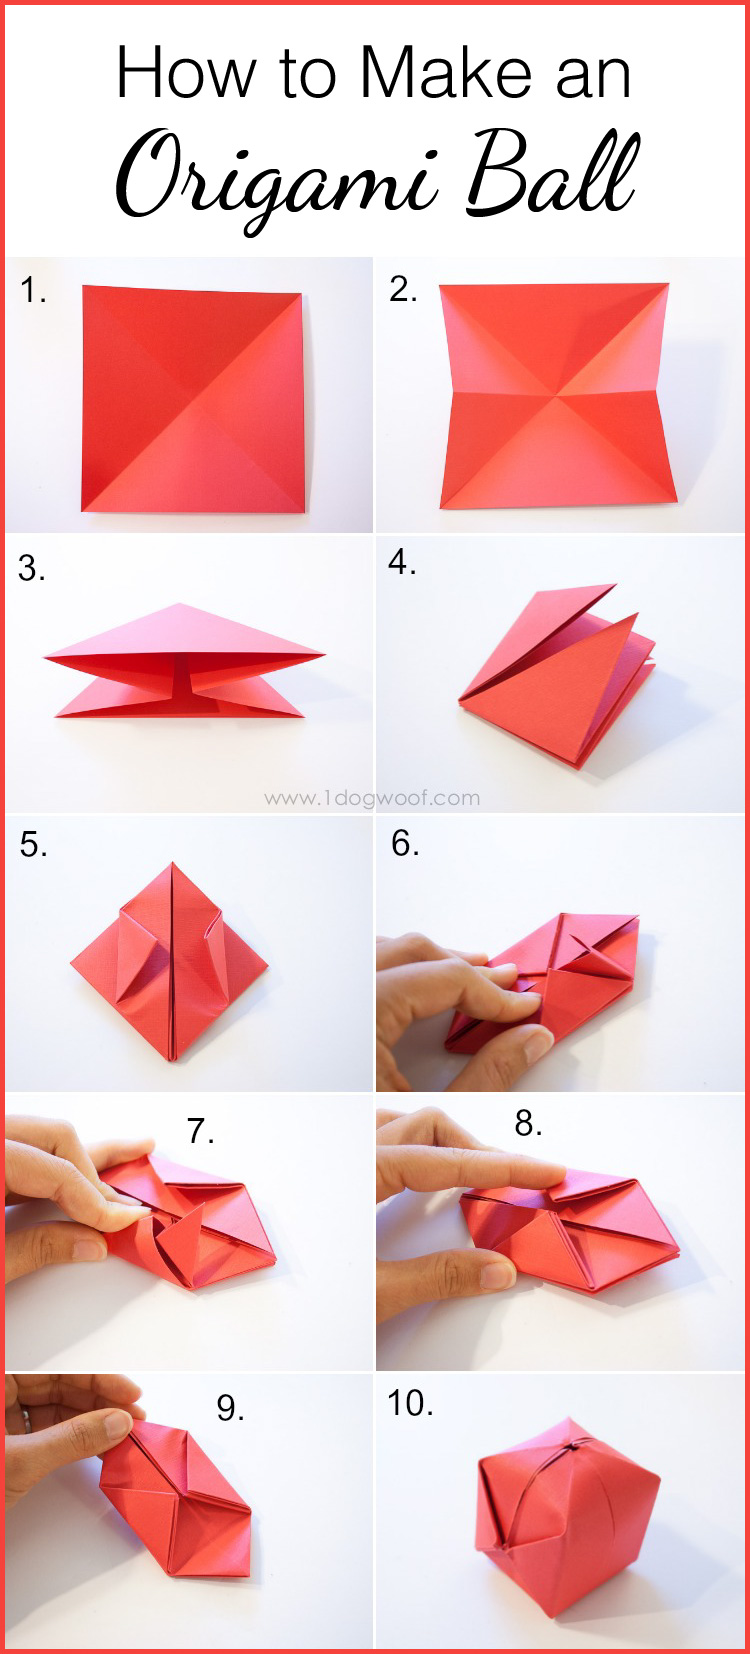 How to Make an Origami Ball | www.1dogwoof.com